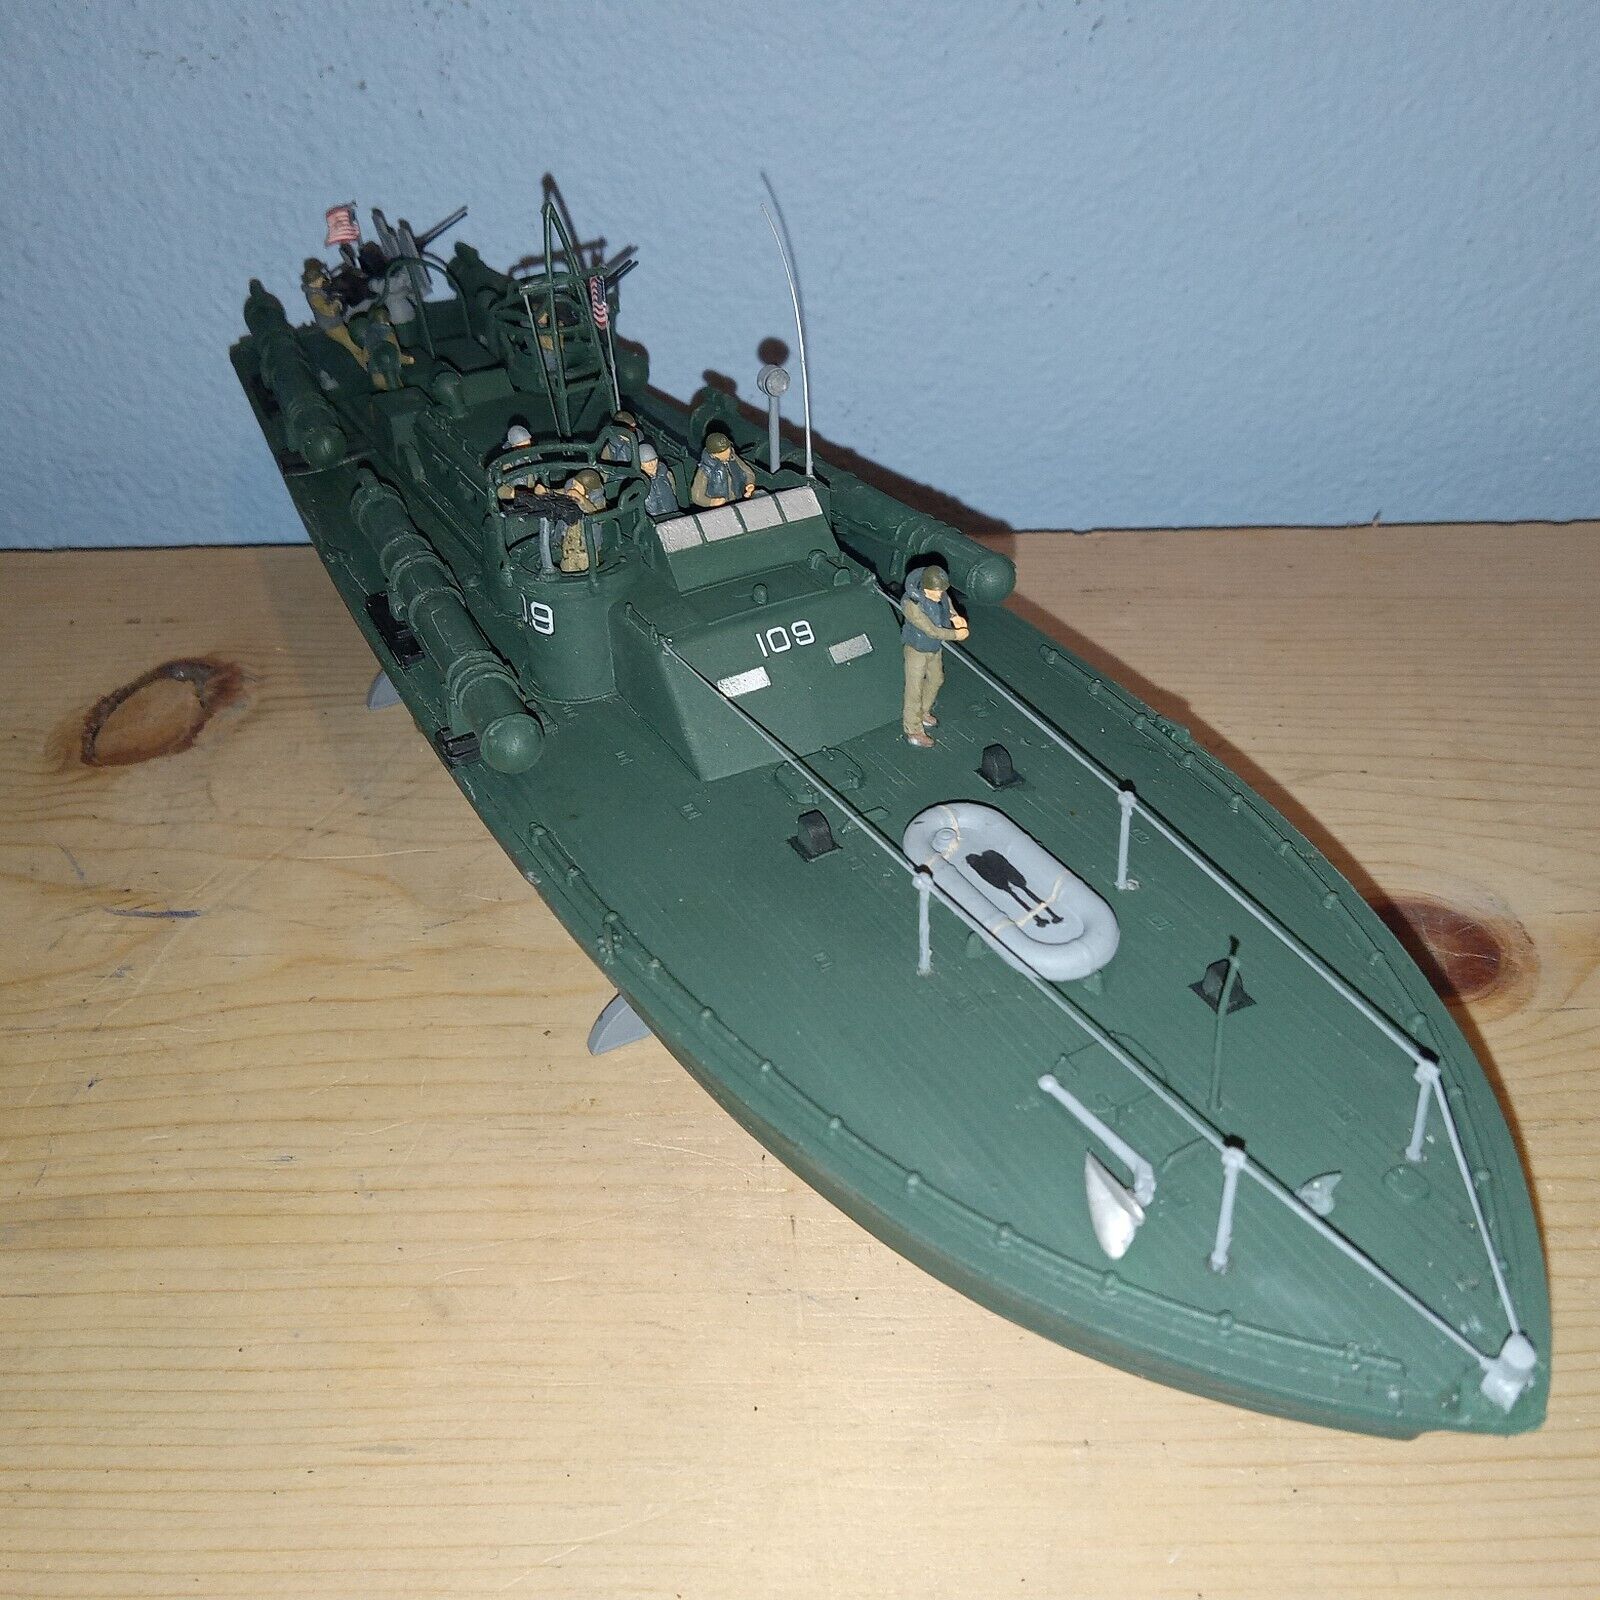 WW2 US NAVY Elco Motor Torpedo Boat PT 109 of 1942 scale model, built